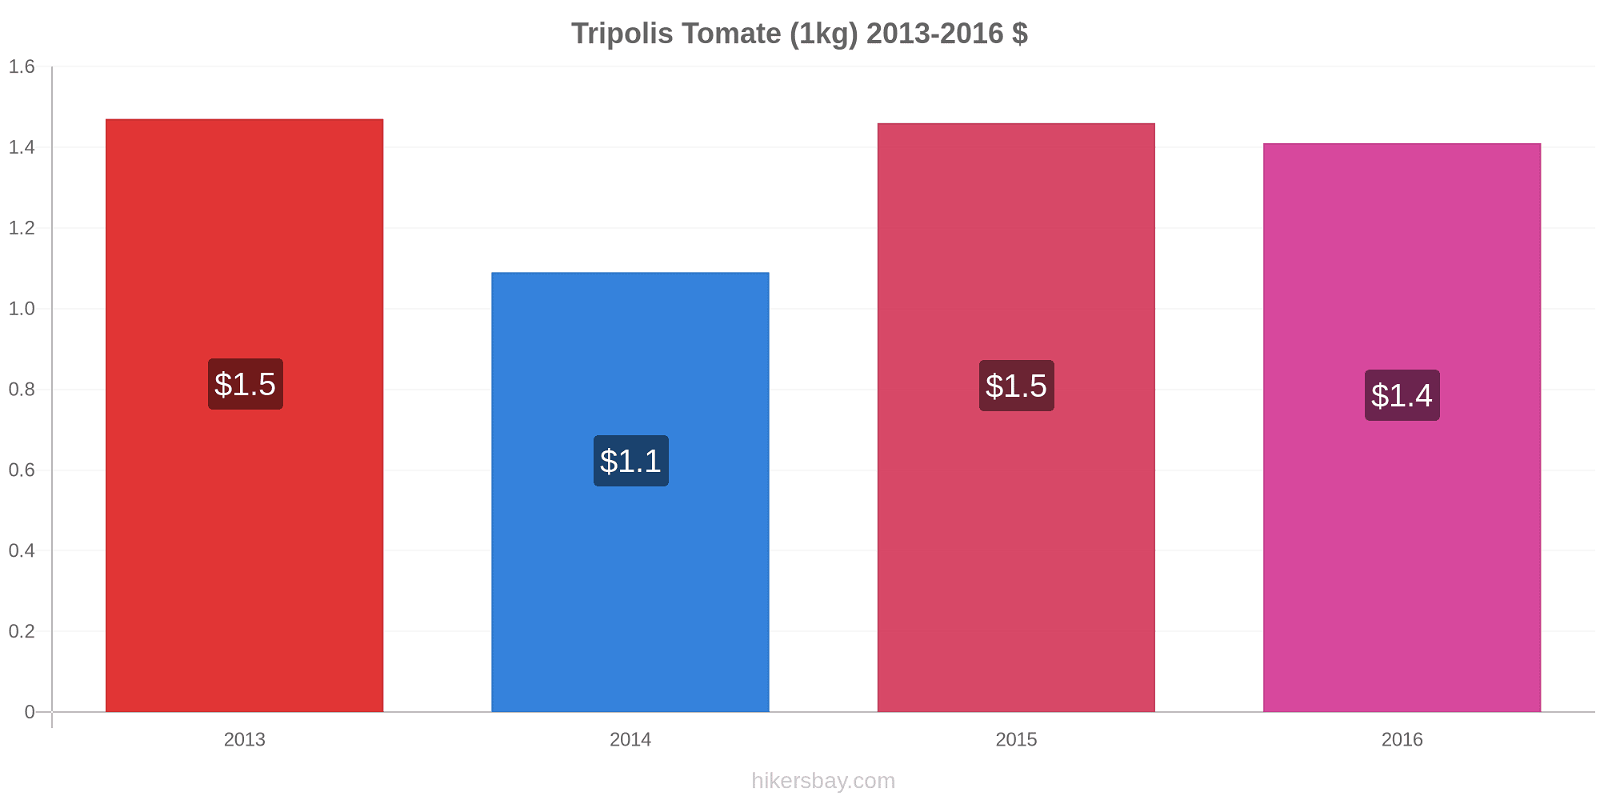 Tripolis Preisänderungen Tomaten (1kg) hikersbay.com